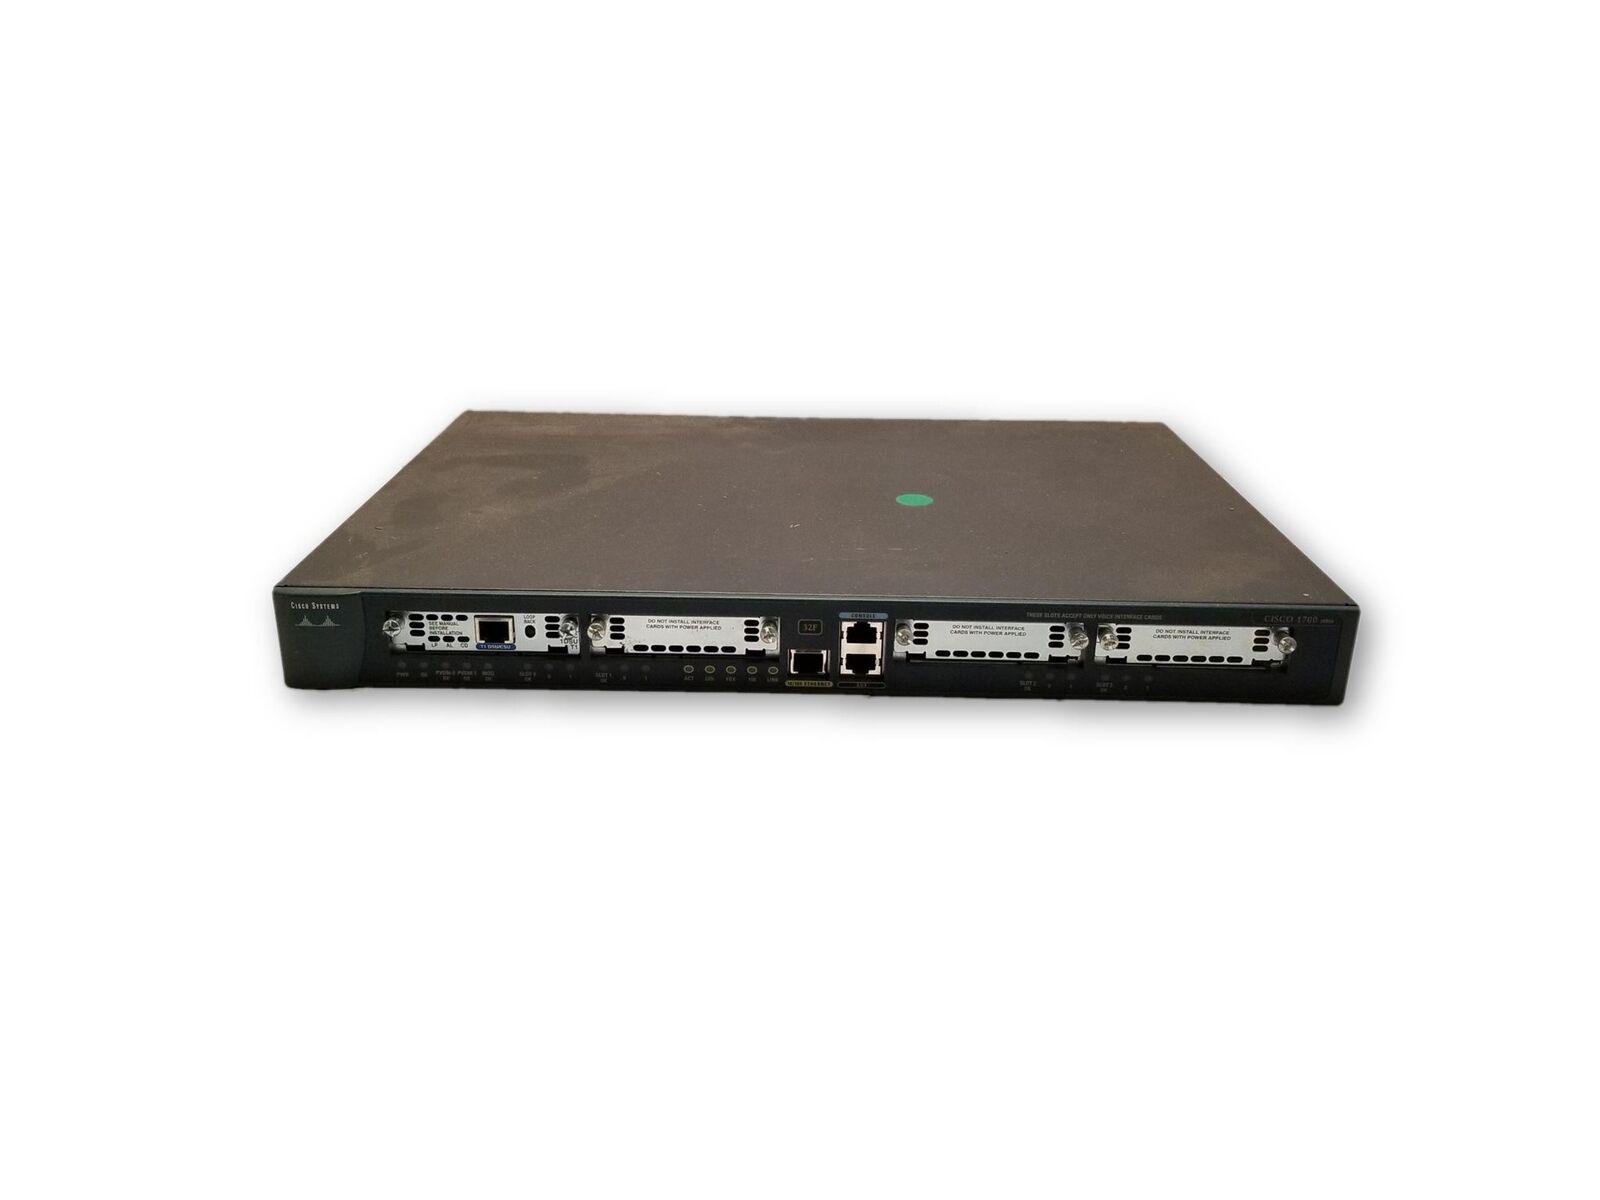 Cisco Systems 1700 Series Model 1760 Modular Access Router